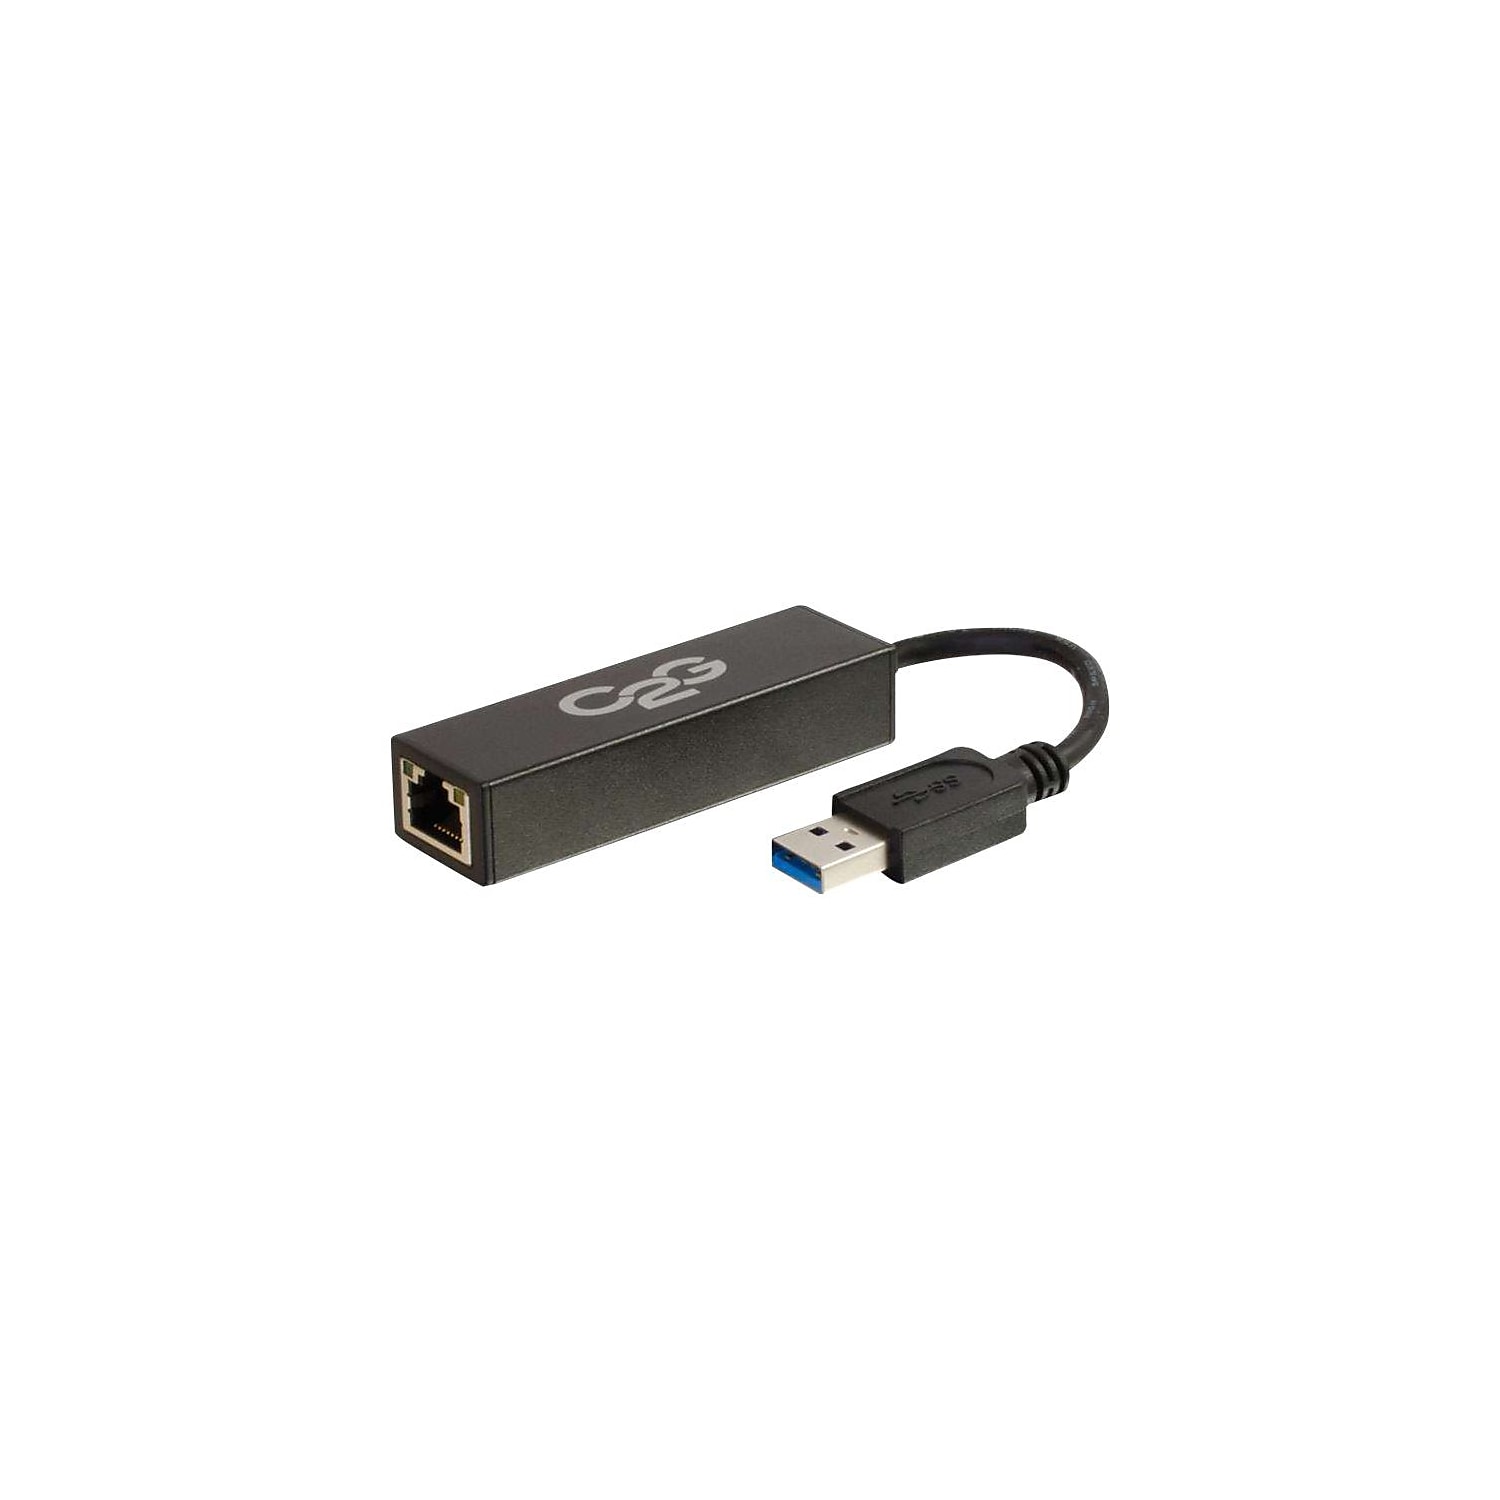 C2G 39700 USB 3.0 to Gigabit Ethernet Network Adapter, Black - image 2 of 2